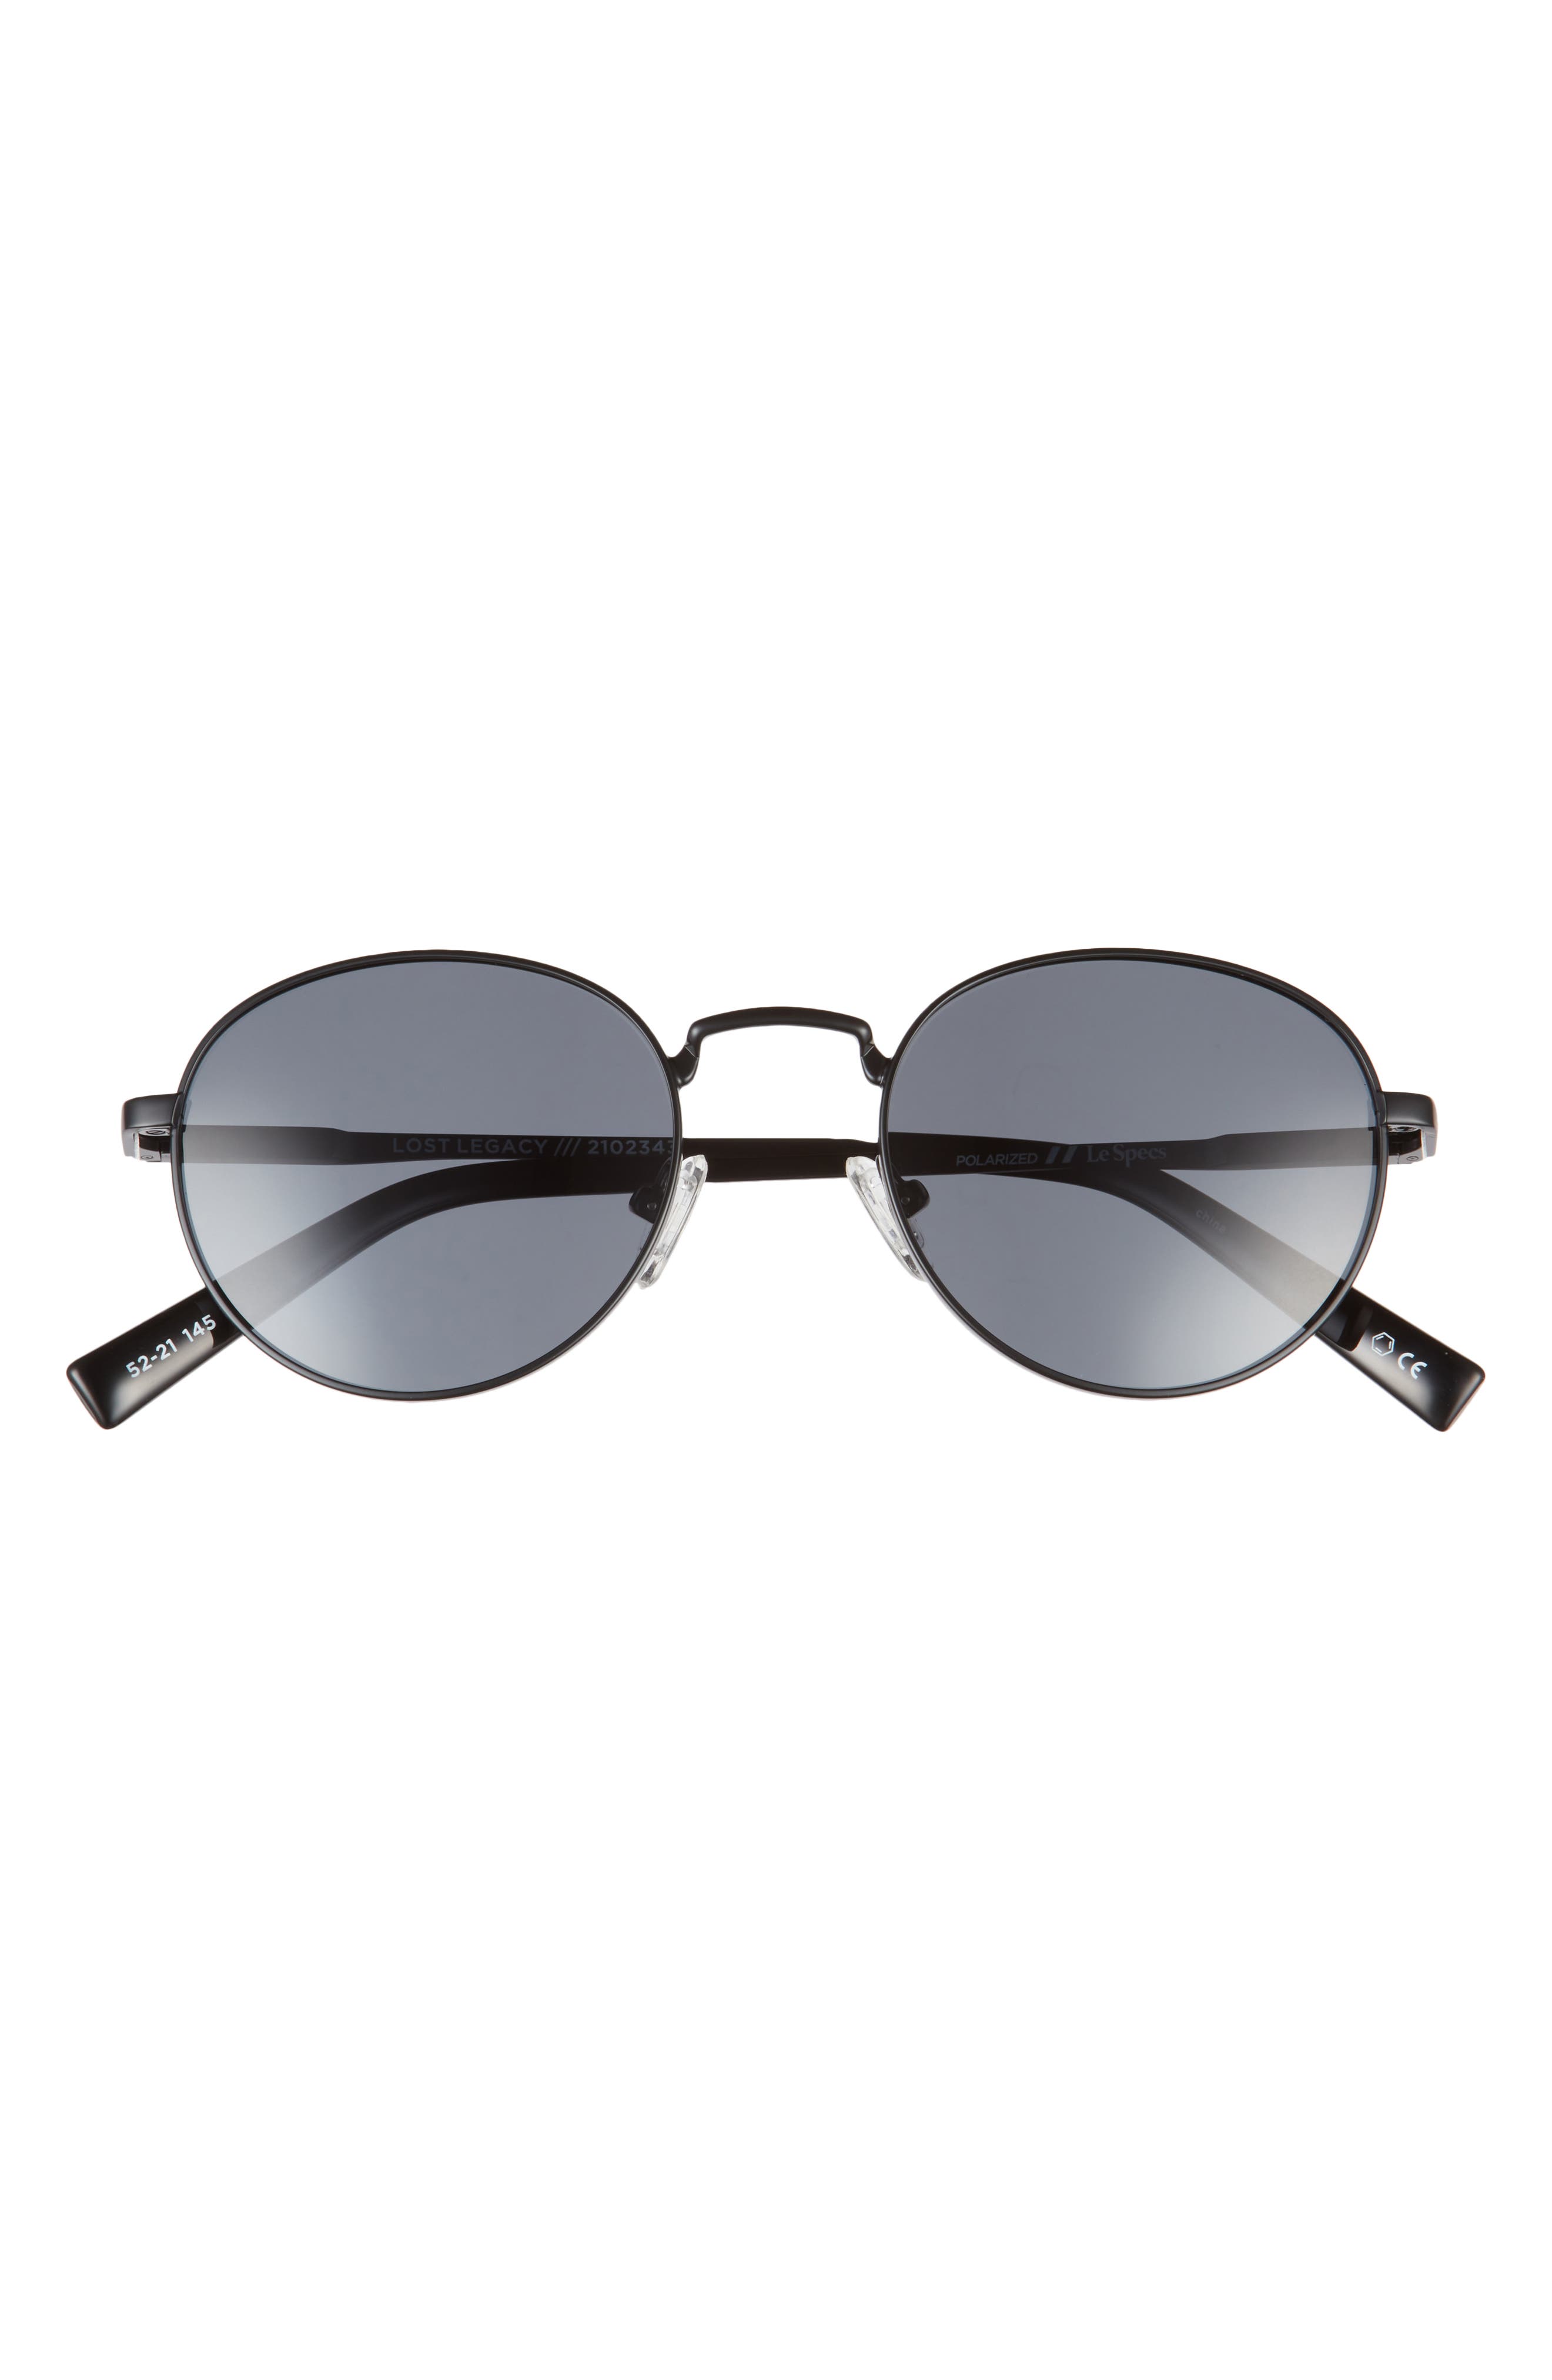 Le Specs Legacy 52mm Round Sunglasses in Black/Smoke Mono Polarized at Nordstrom